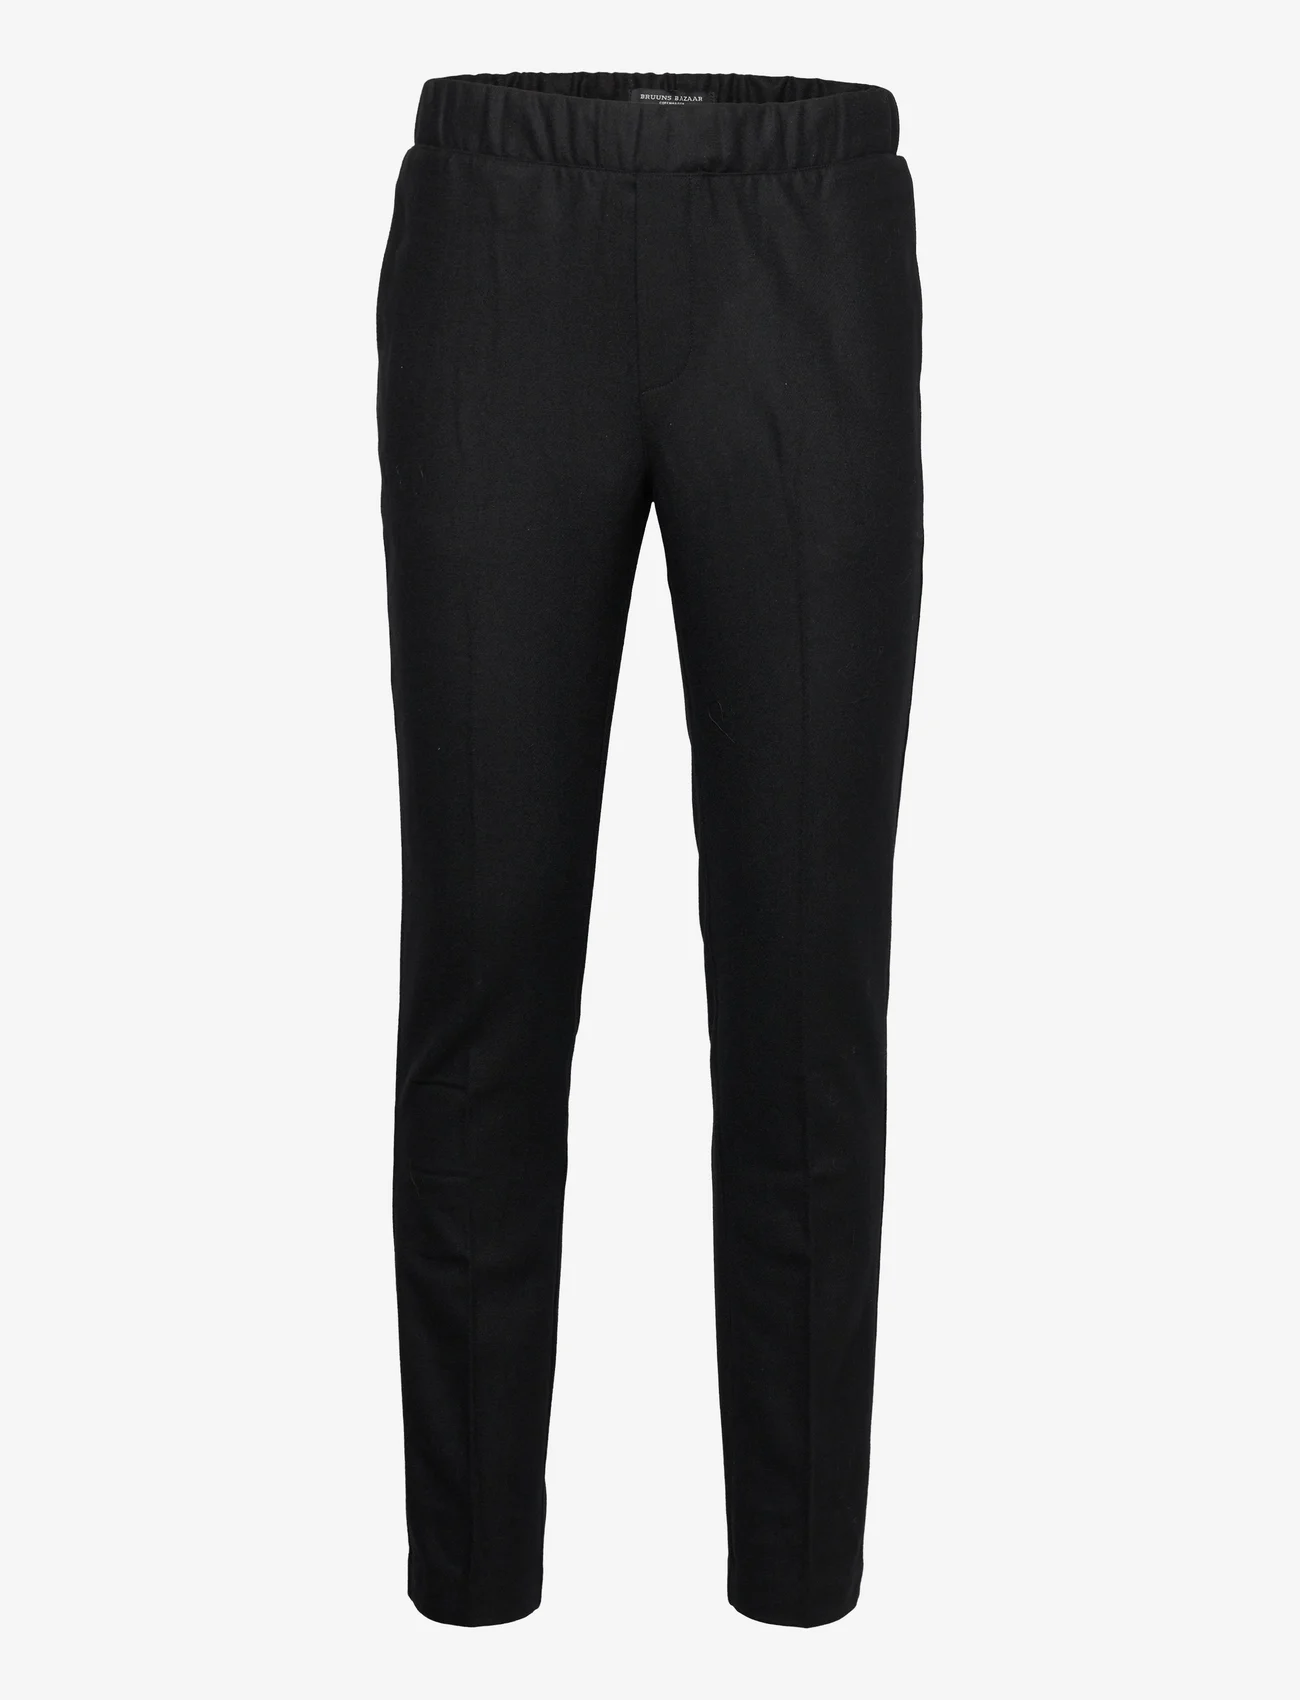 Bruuns Bazaar - Clement Clark Pants - casual trousers - black - 0